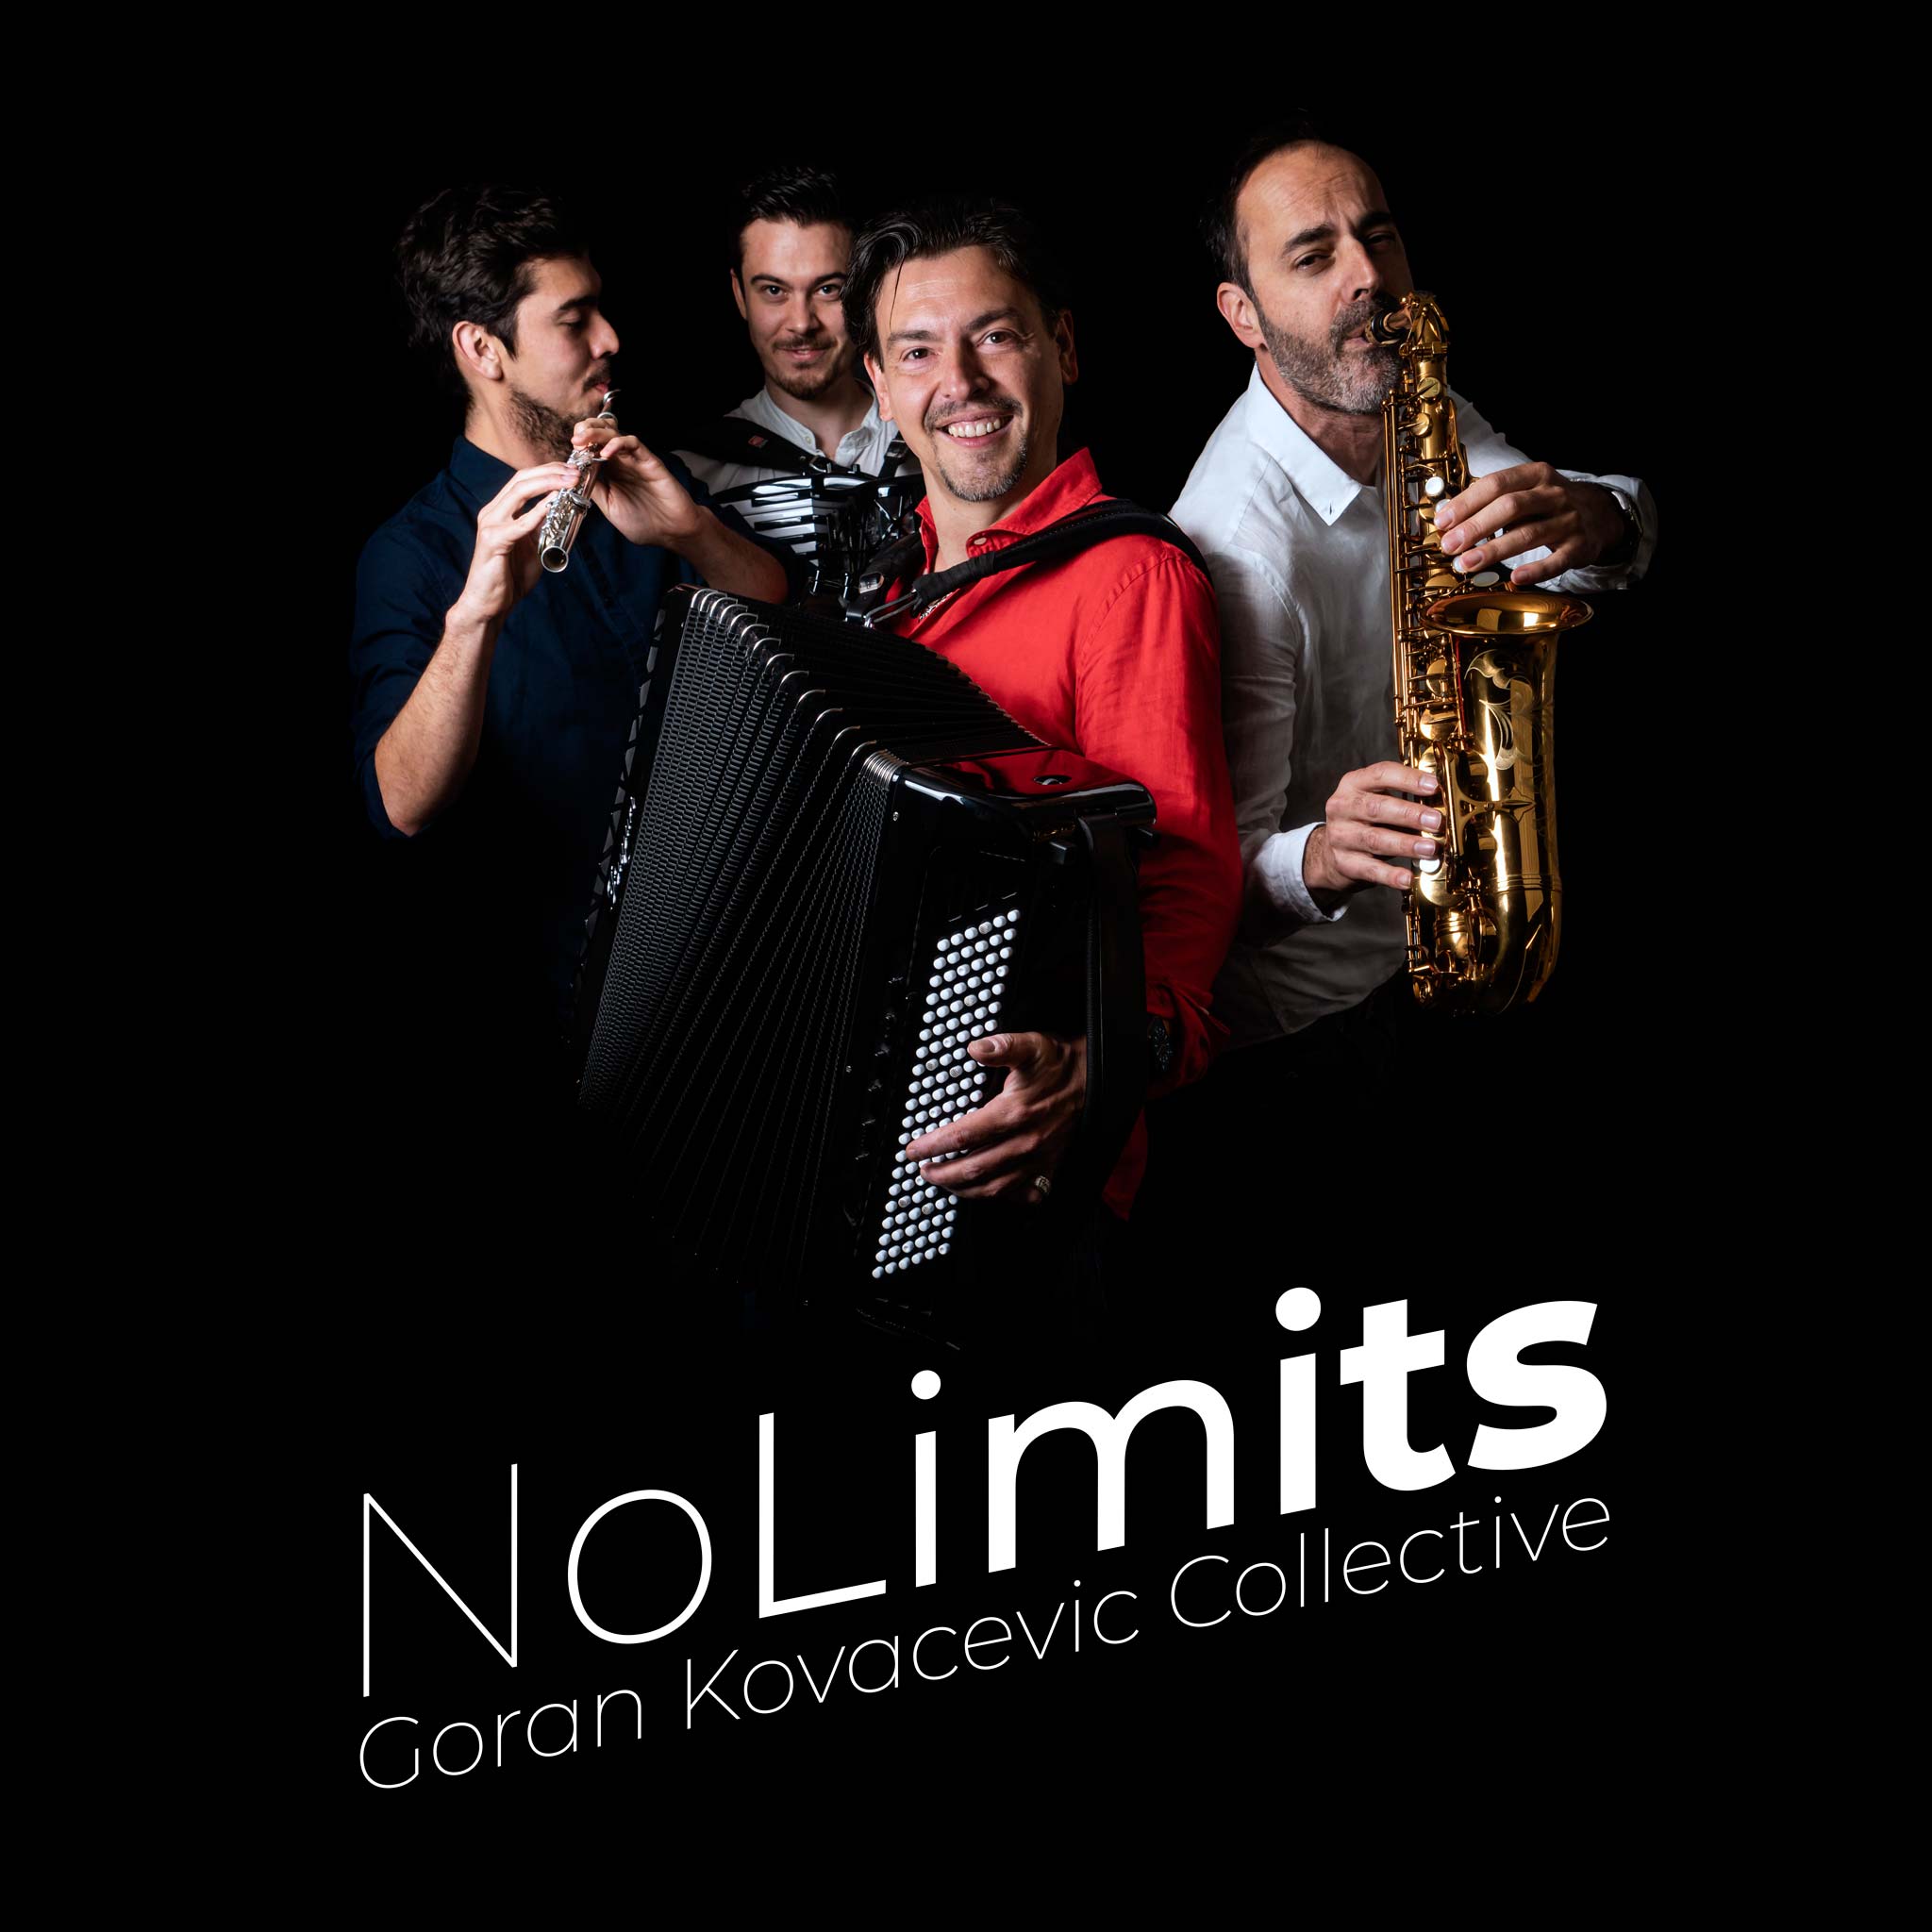 NoLimits - Goran Kovacevic Collective